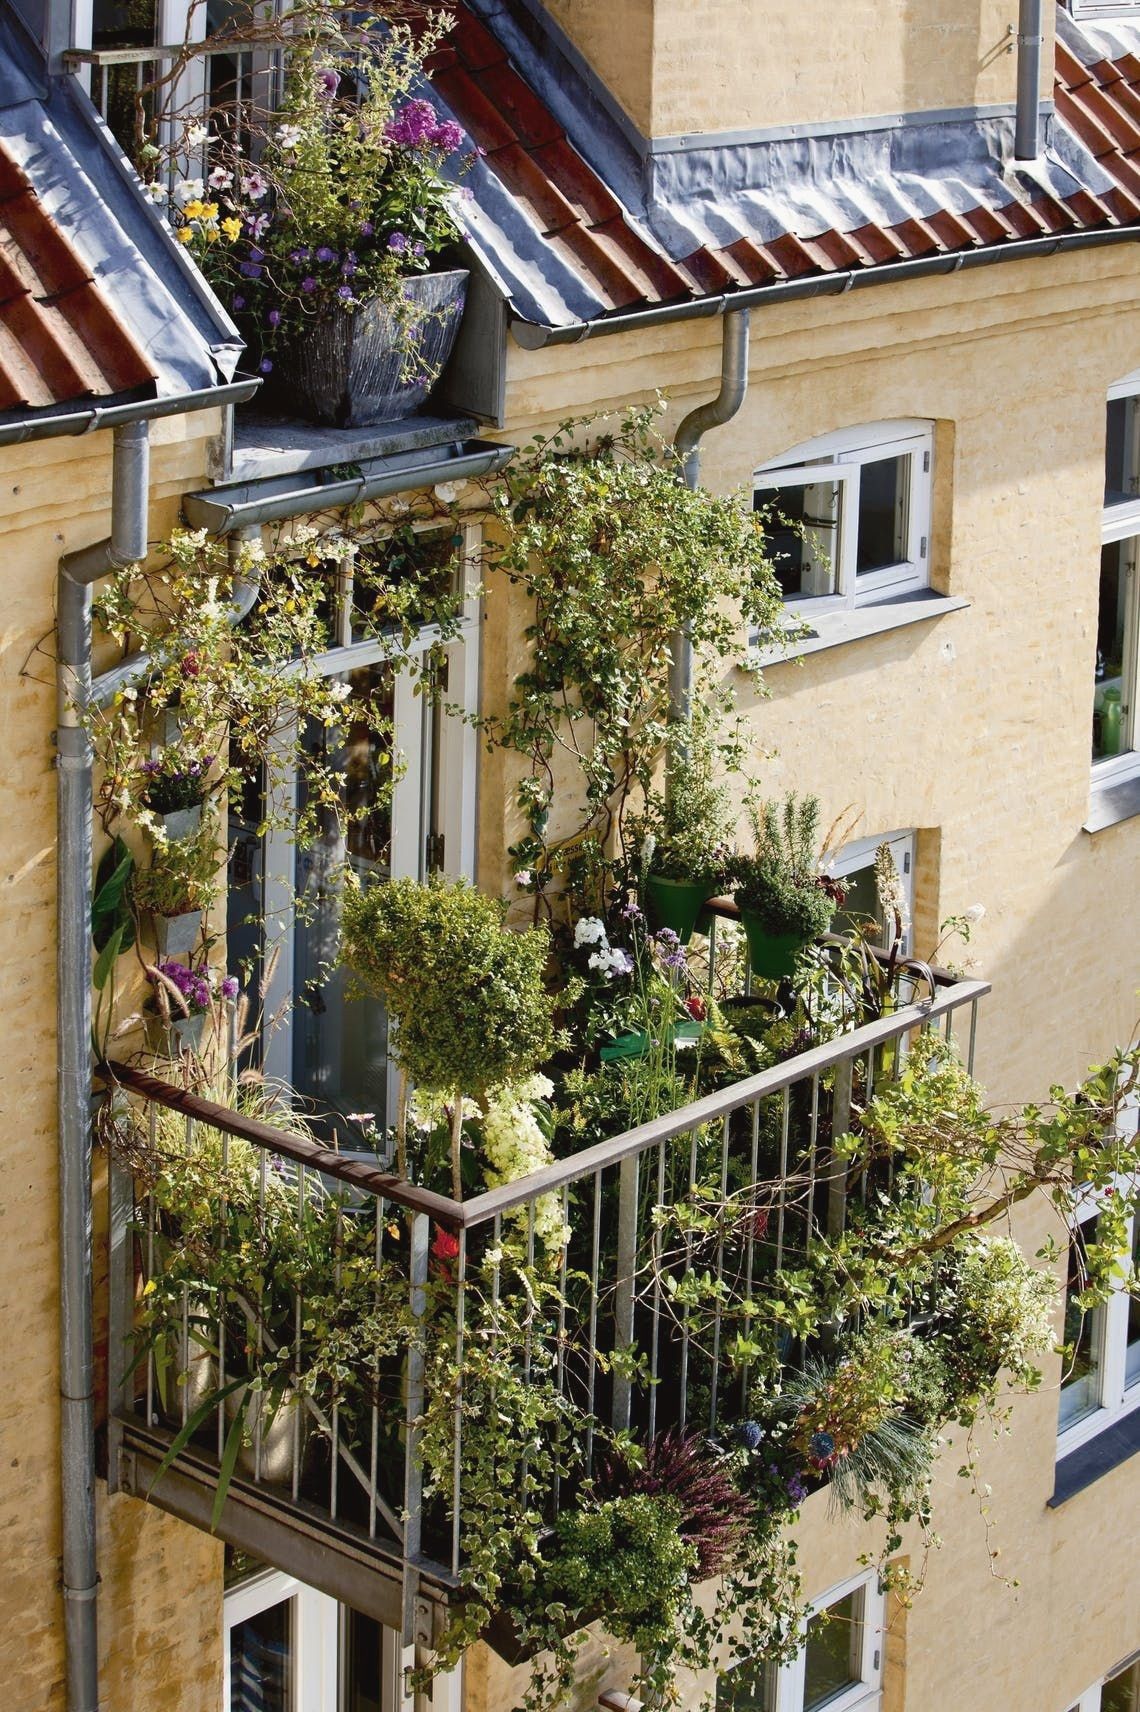 Ideen Balkon Schön We Have some Terrific Balcony Garden Design Ideas as Well as